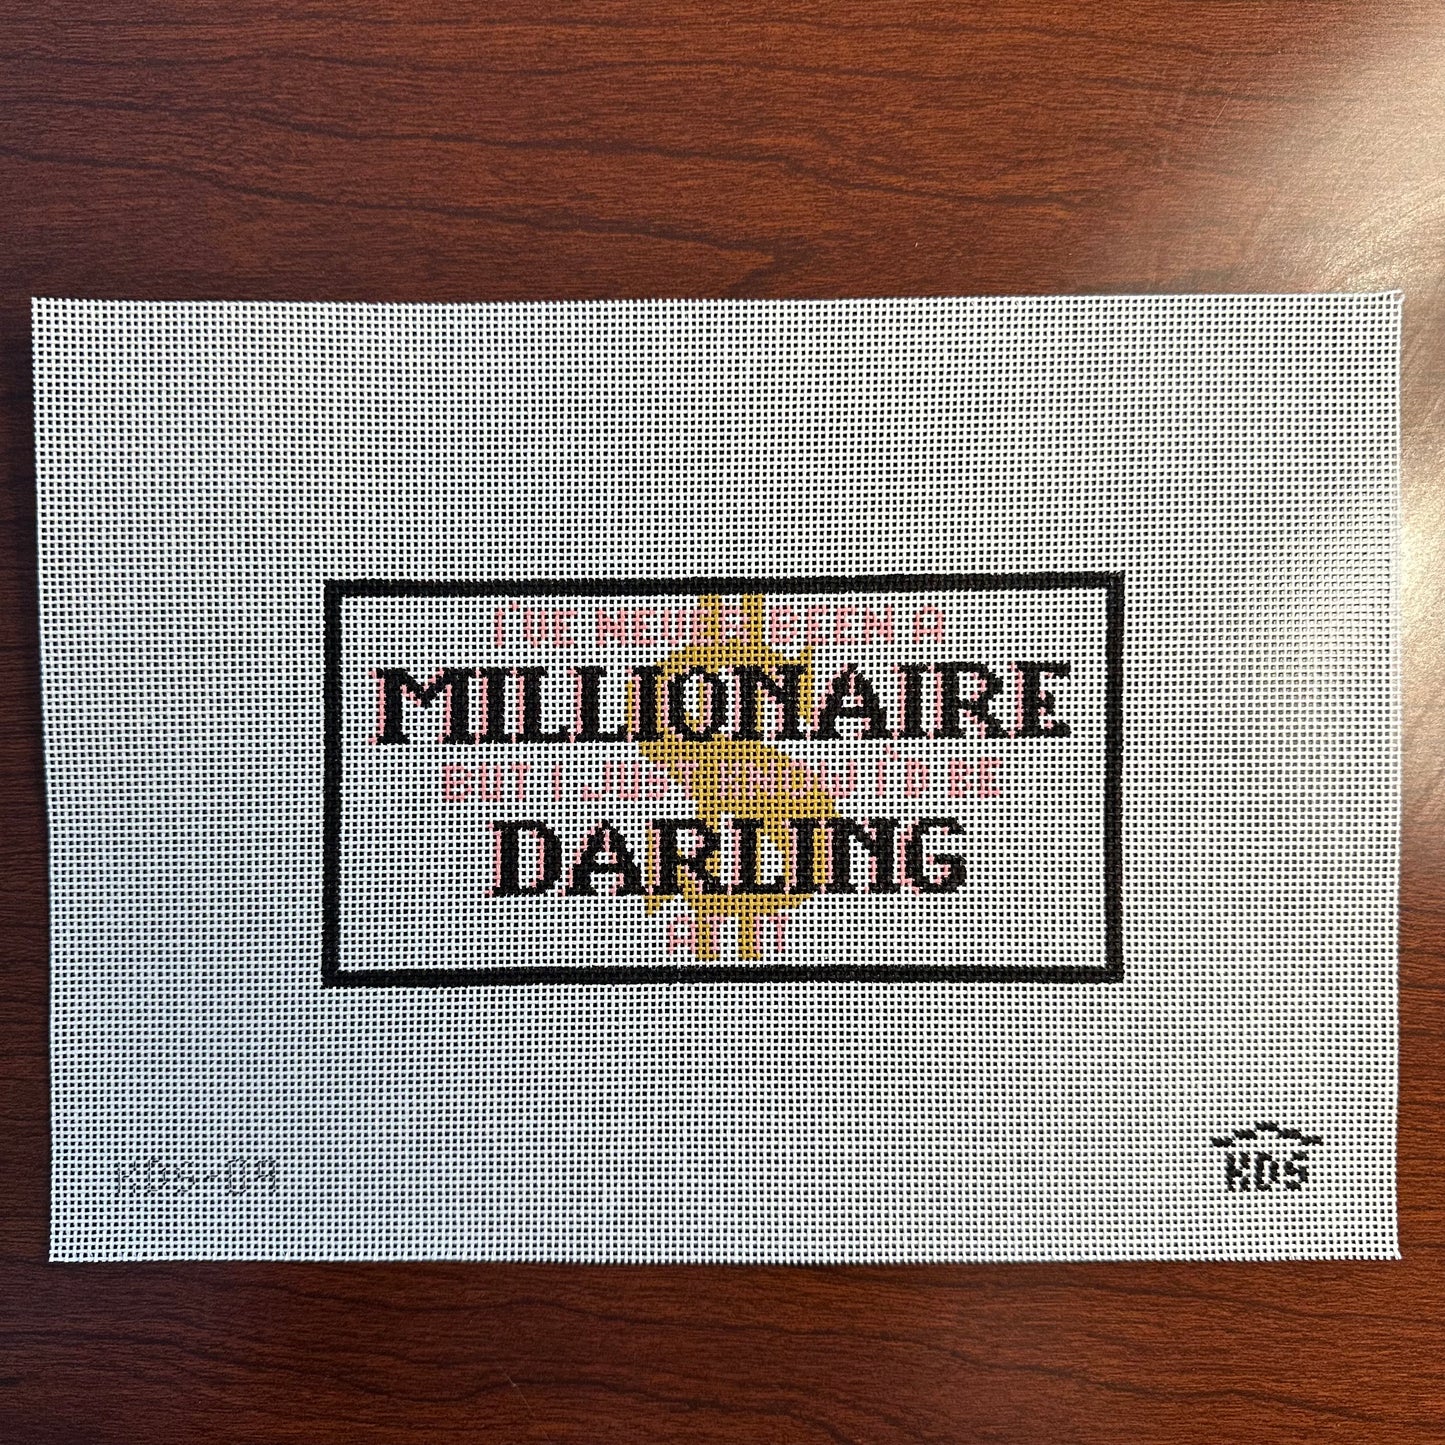 Millionaire Darling